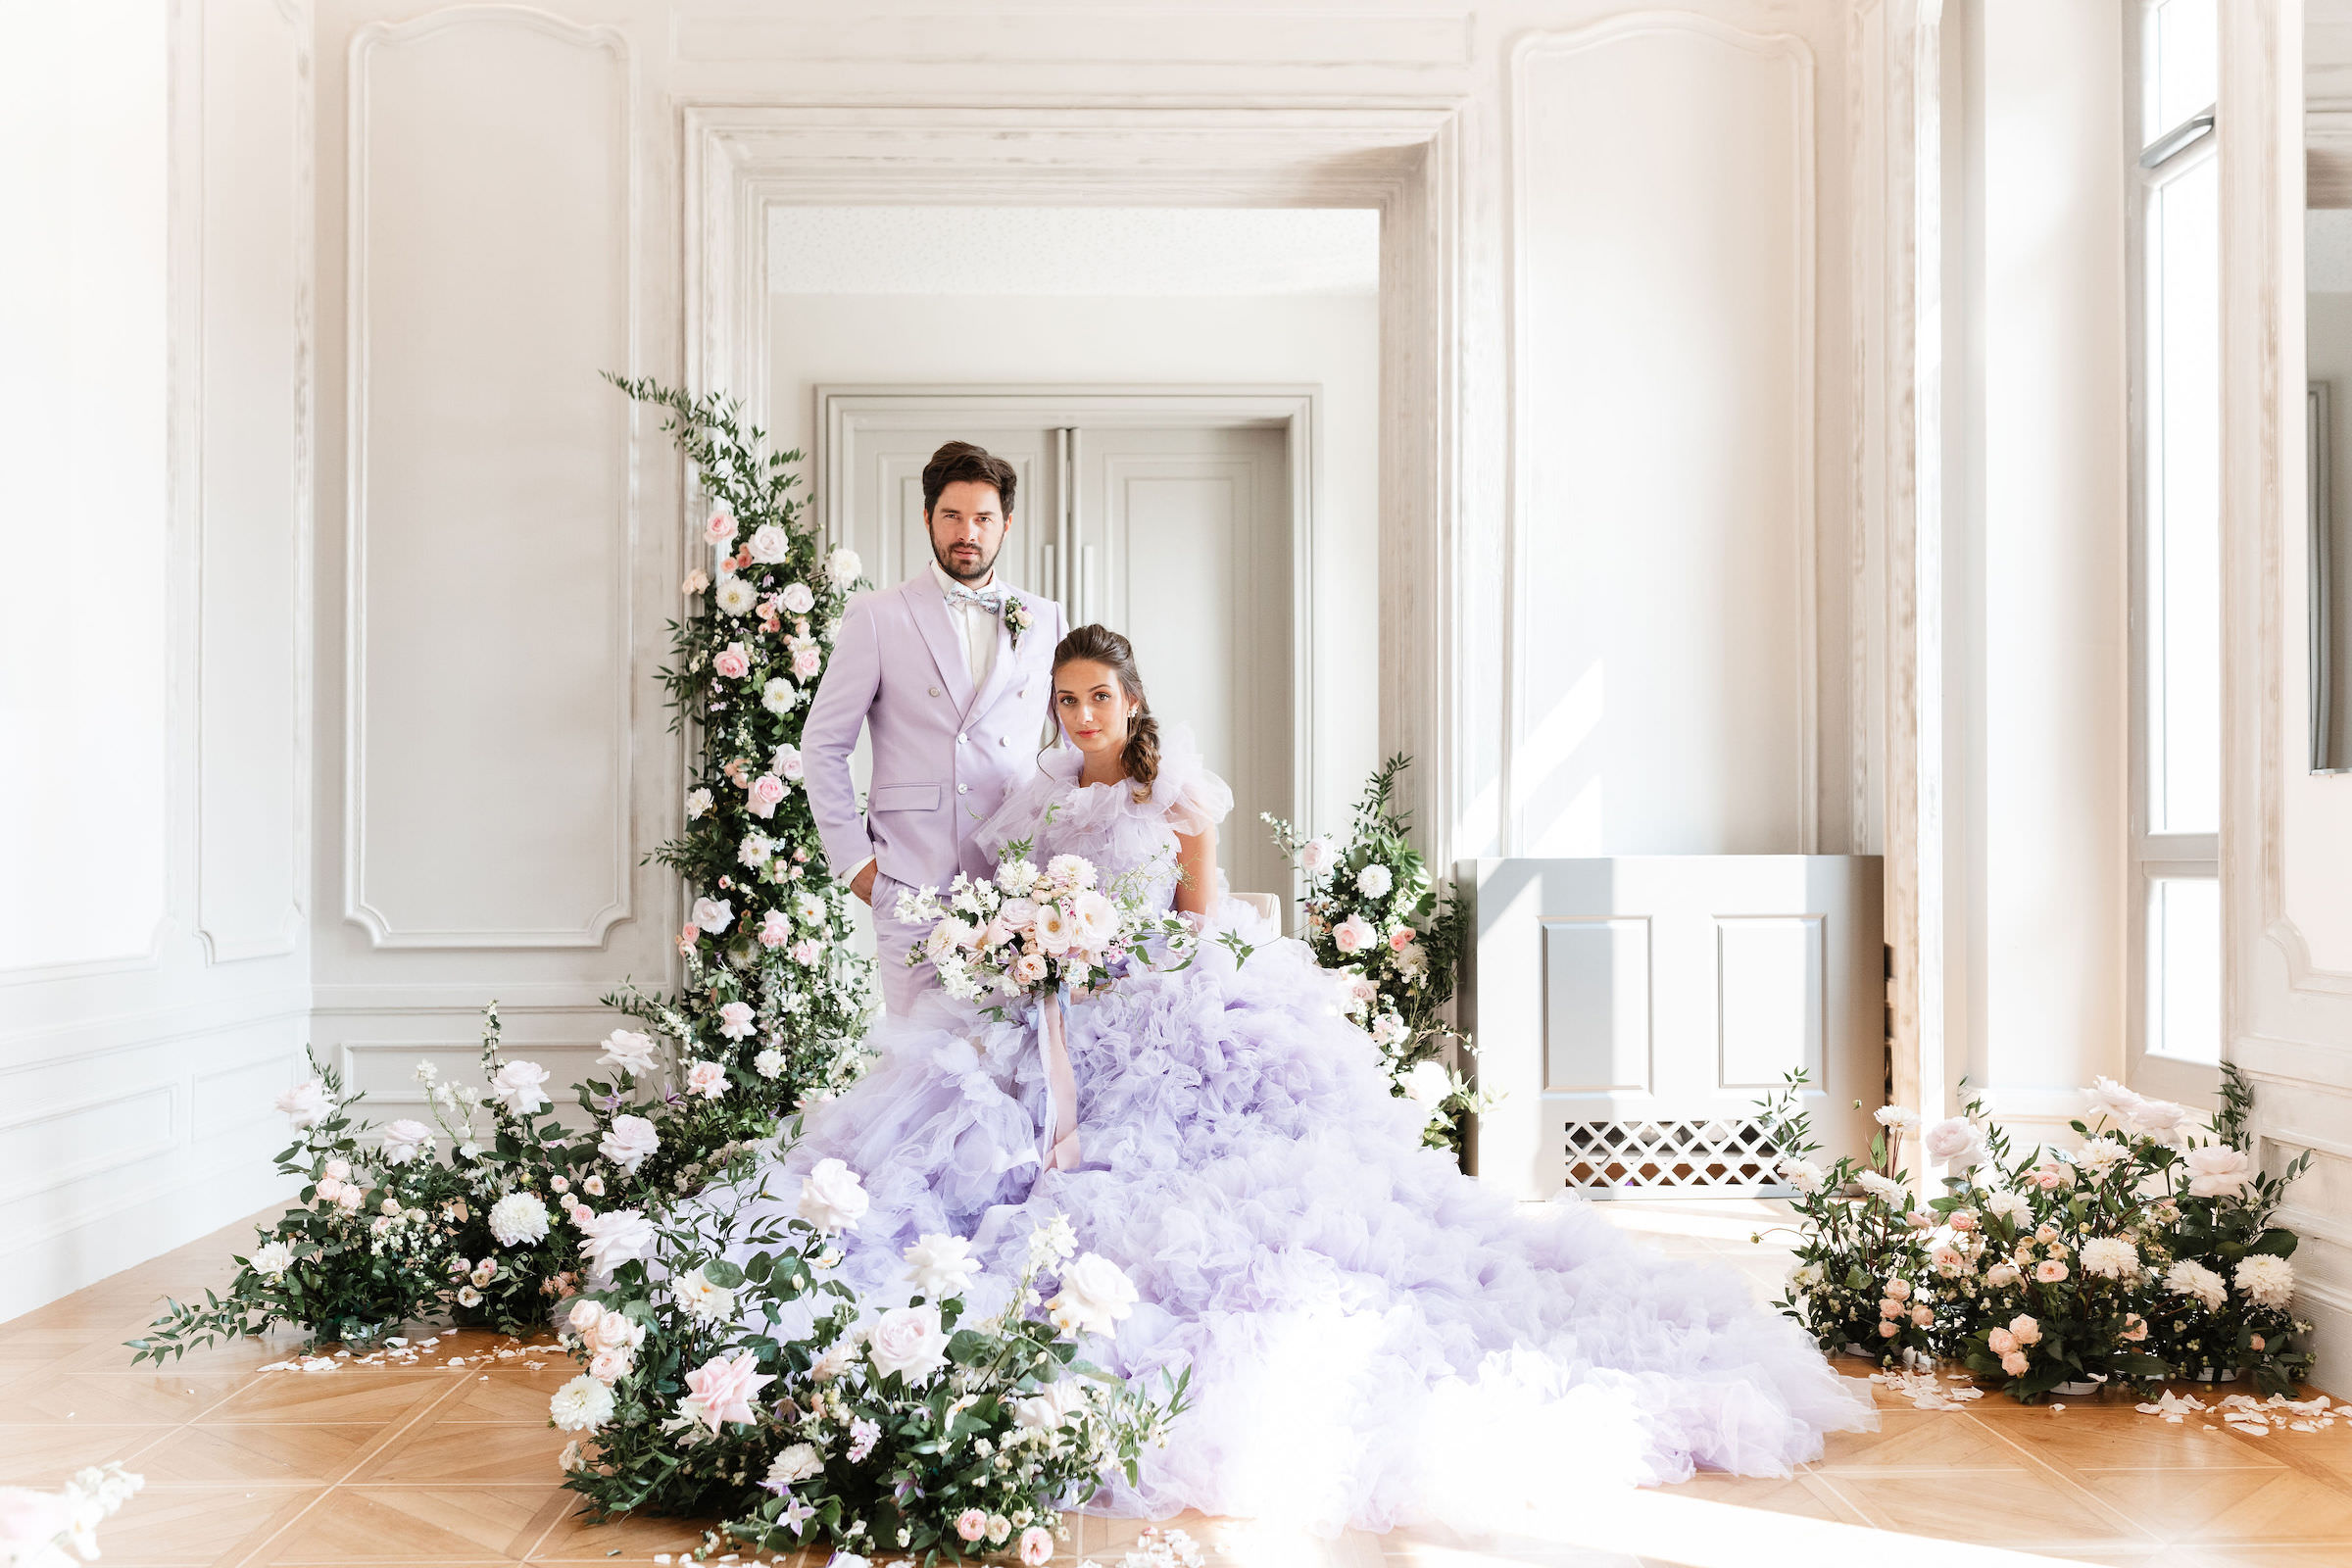 French Garden Wedding inspiration for spring - yanglyphotographie